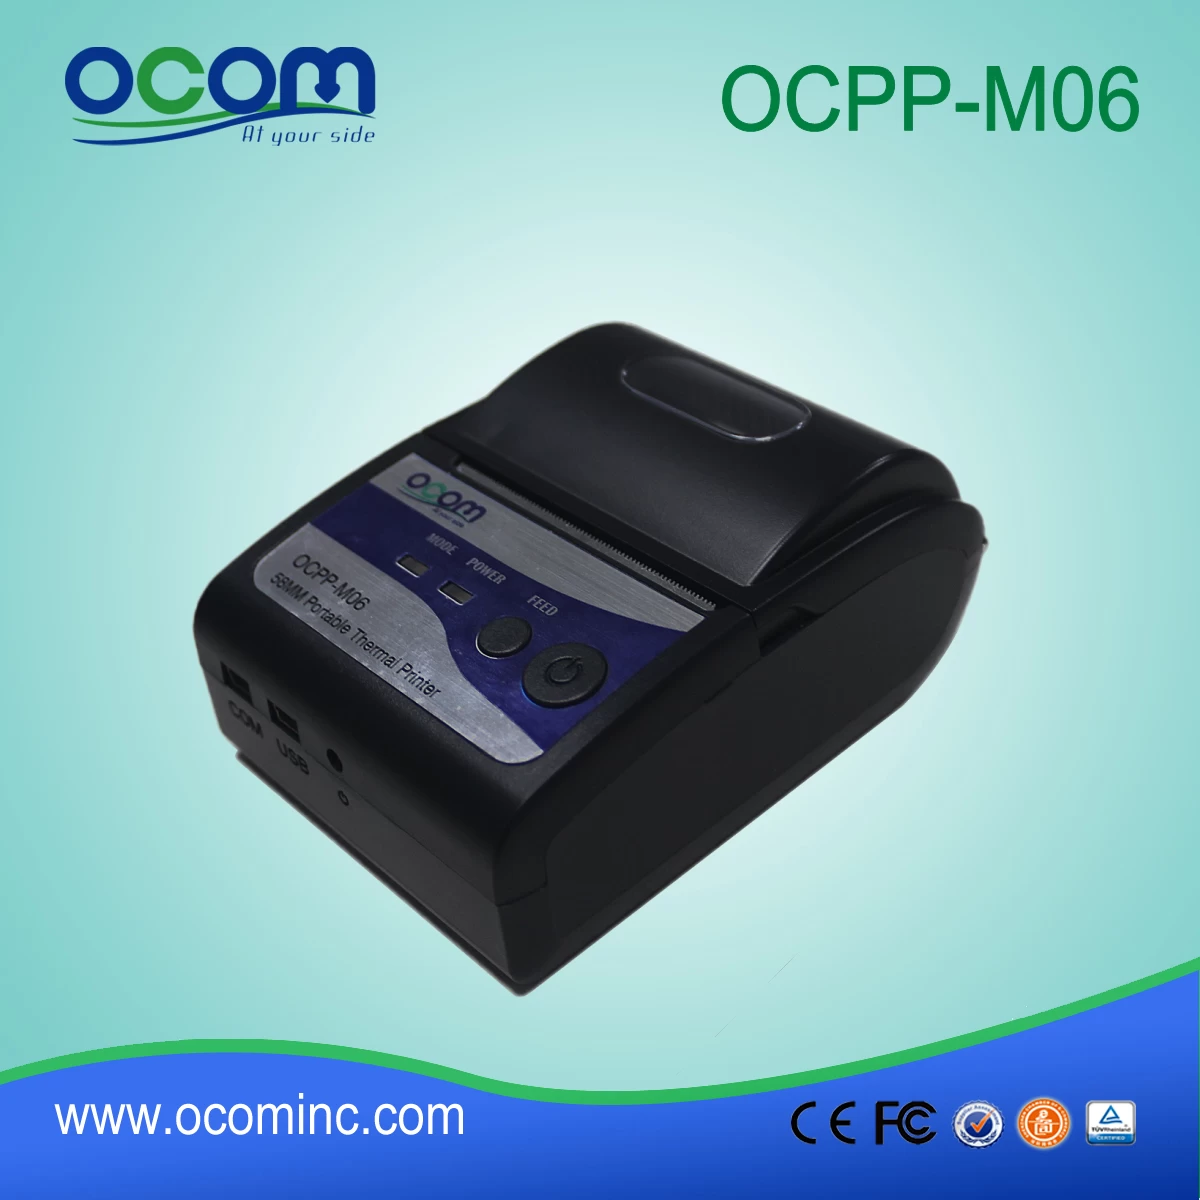 (OCPP-M06) OCOM 2015 Hot selling android handheld printer, handheld printer for sale